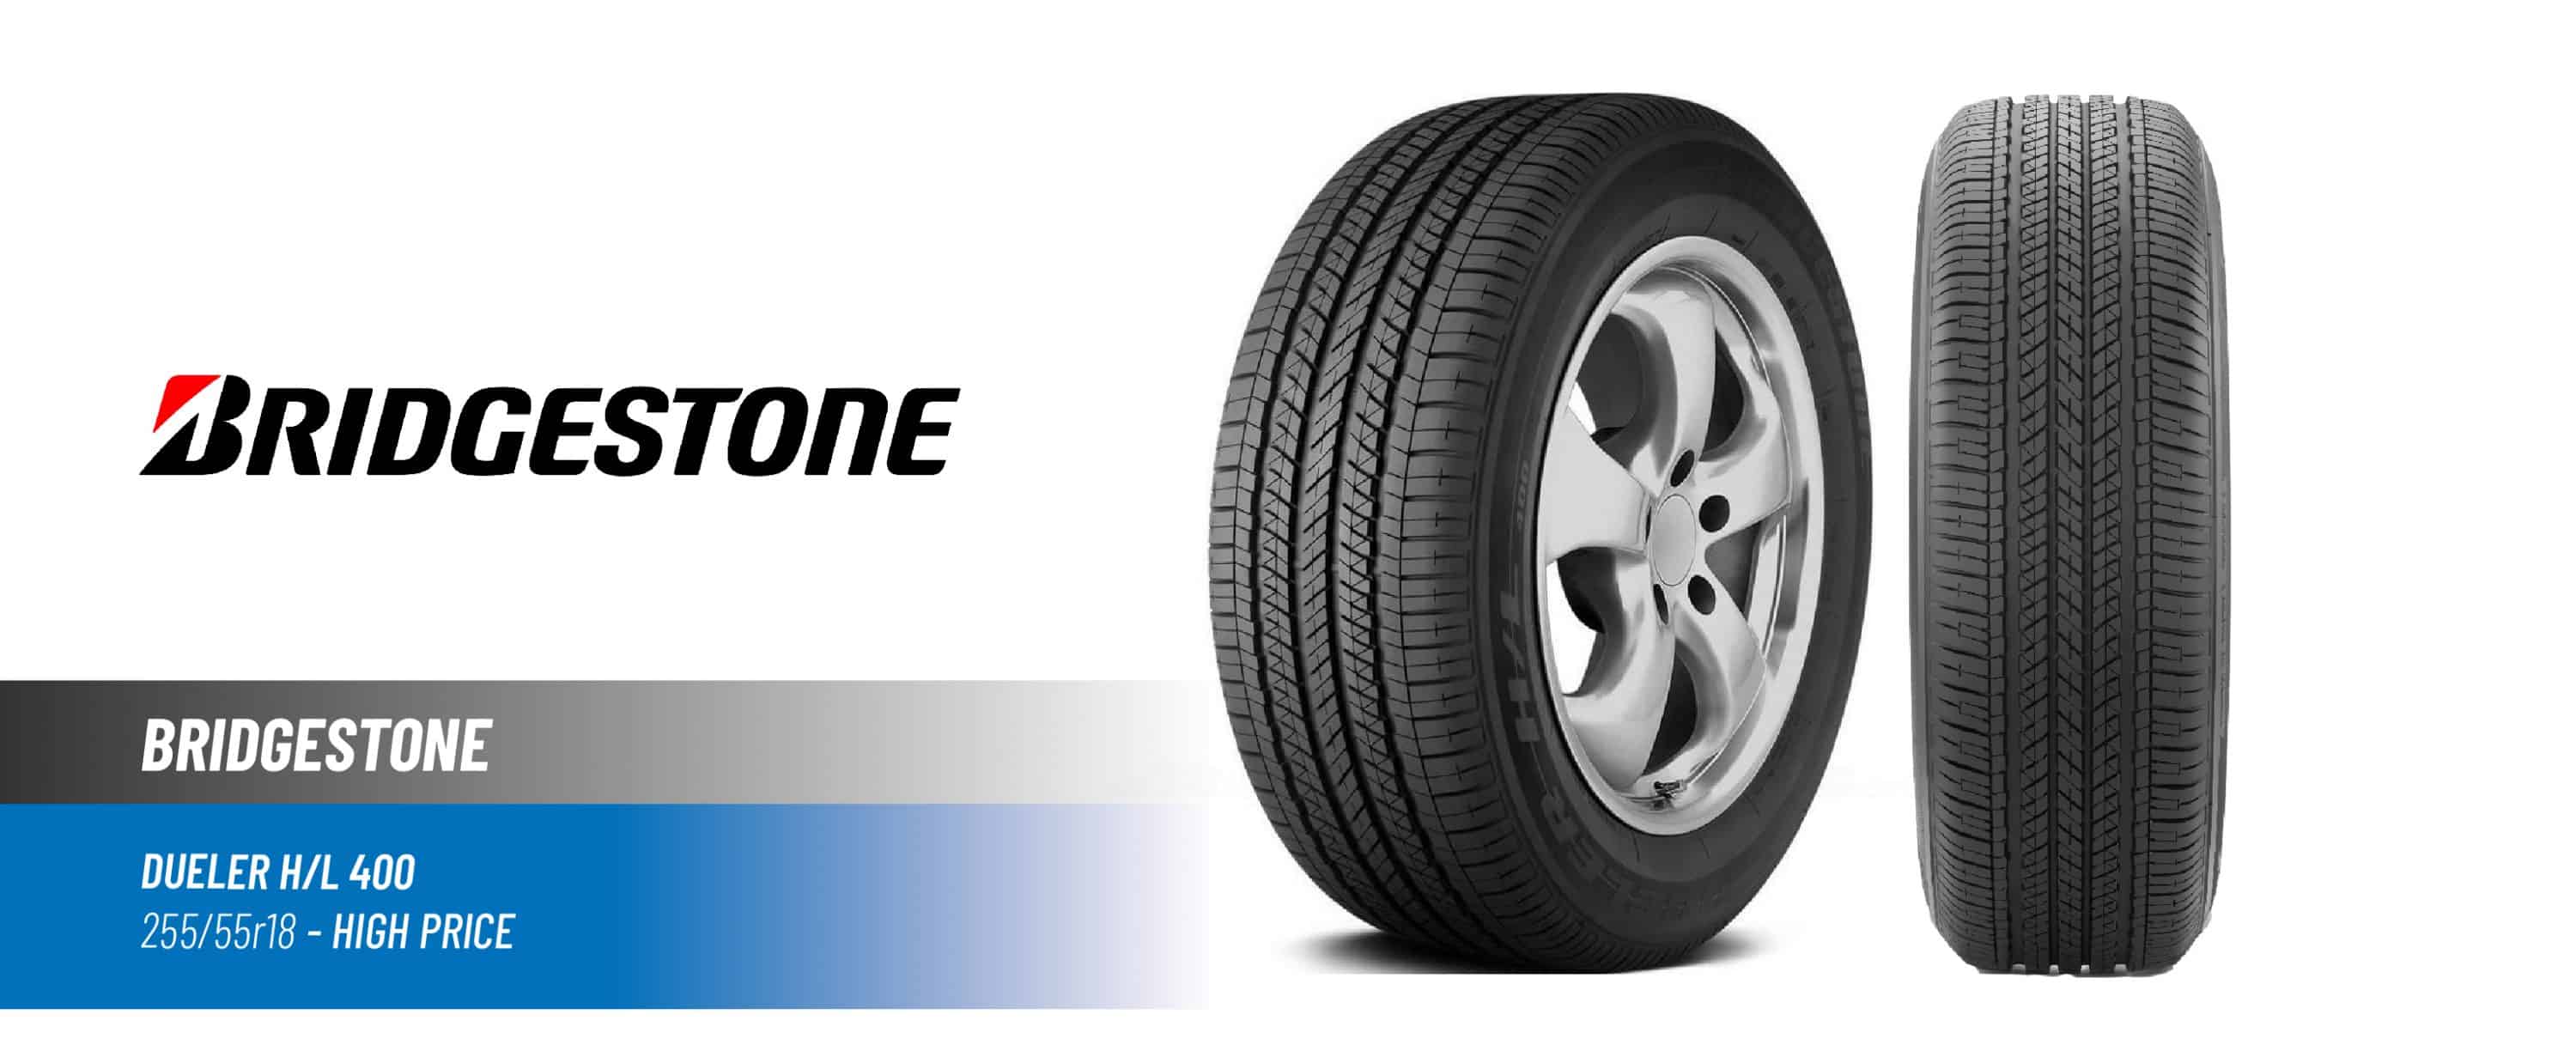 Top#4 High Price: Bridgestone Dueler H/L 400 –best 255/55r18